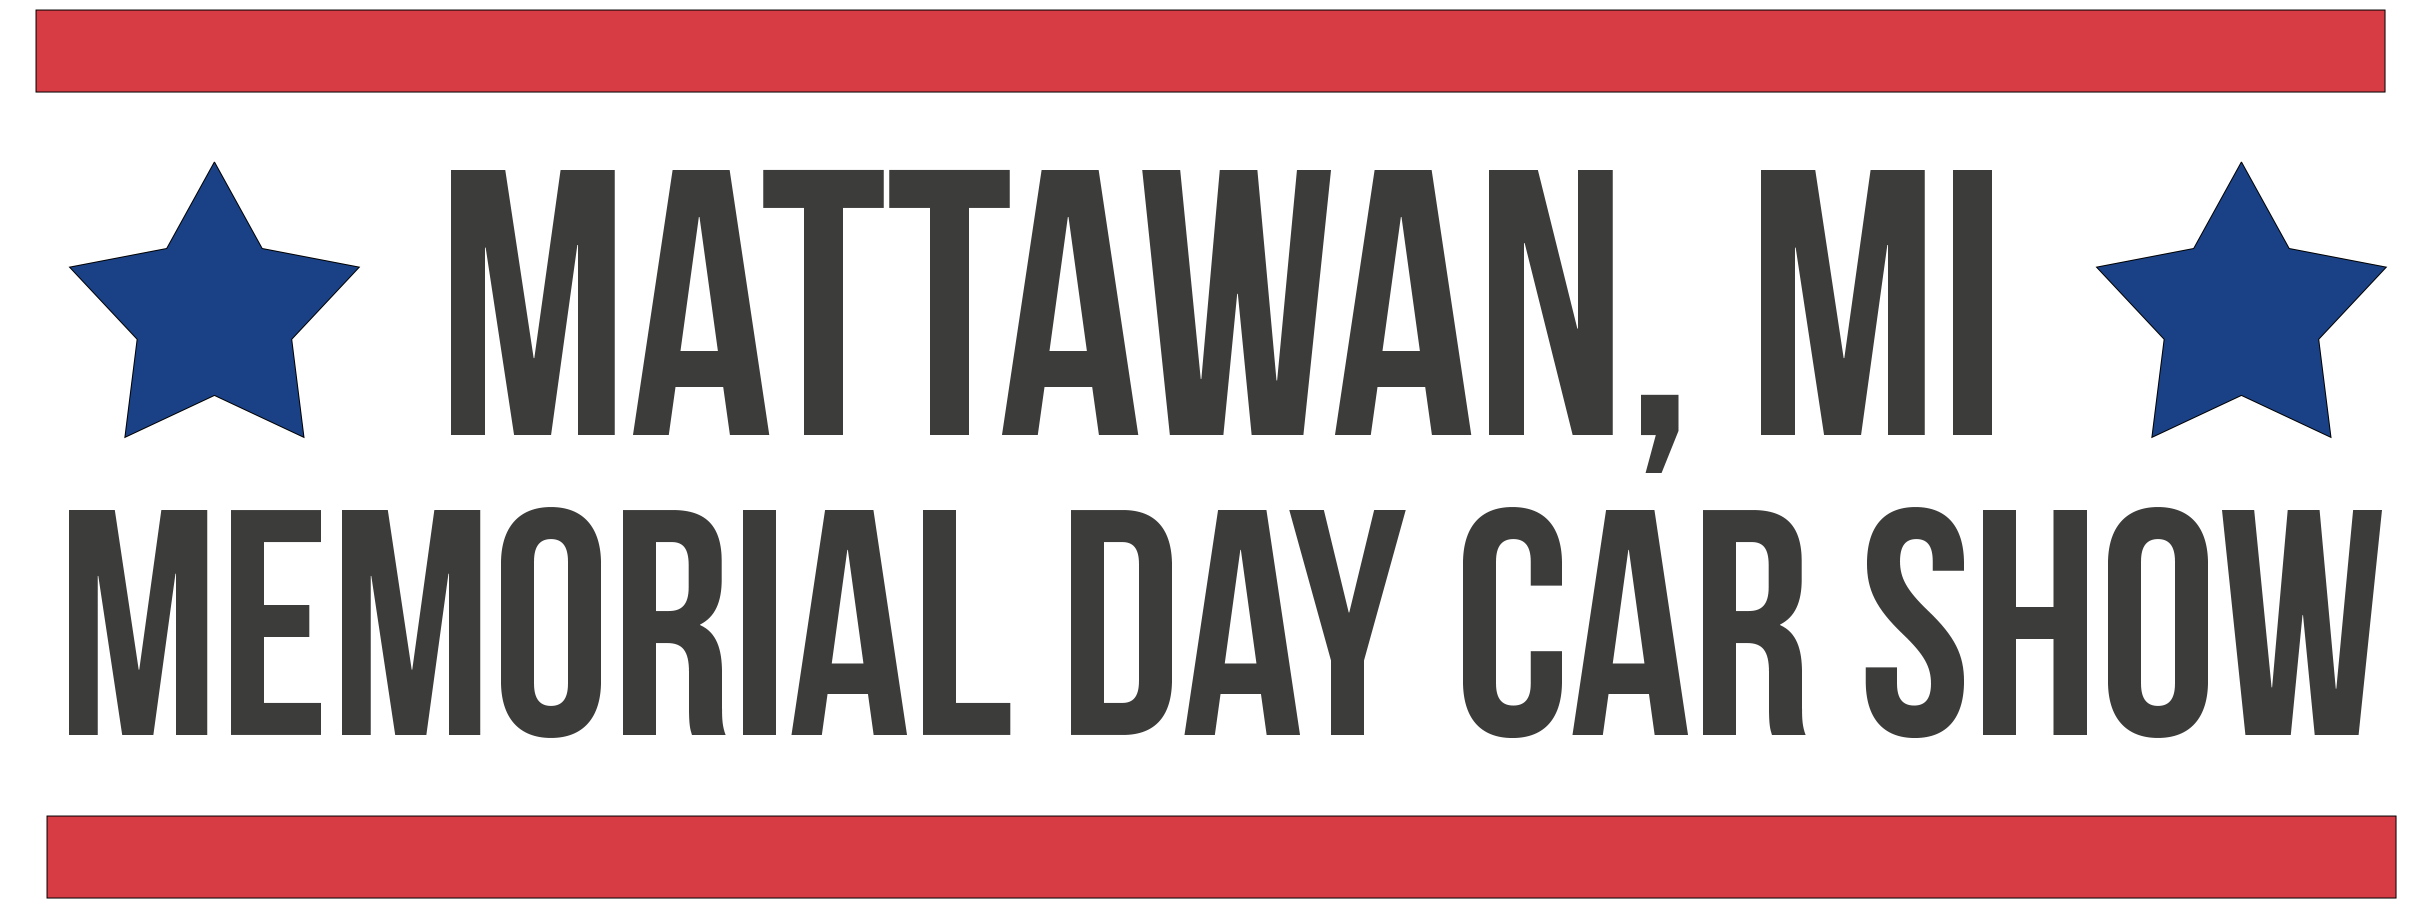 Mattawan, MI Memorial Day Car Show